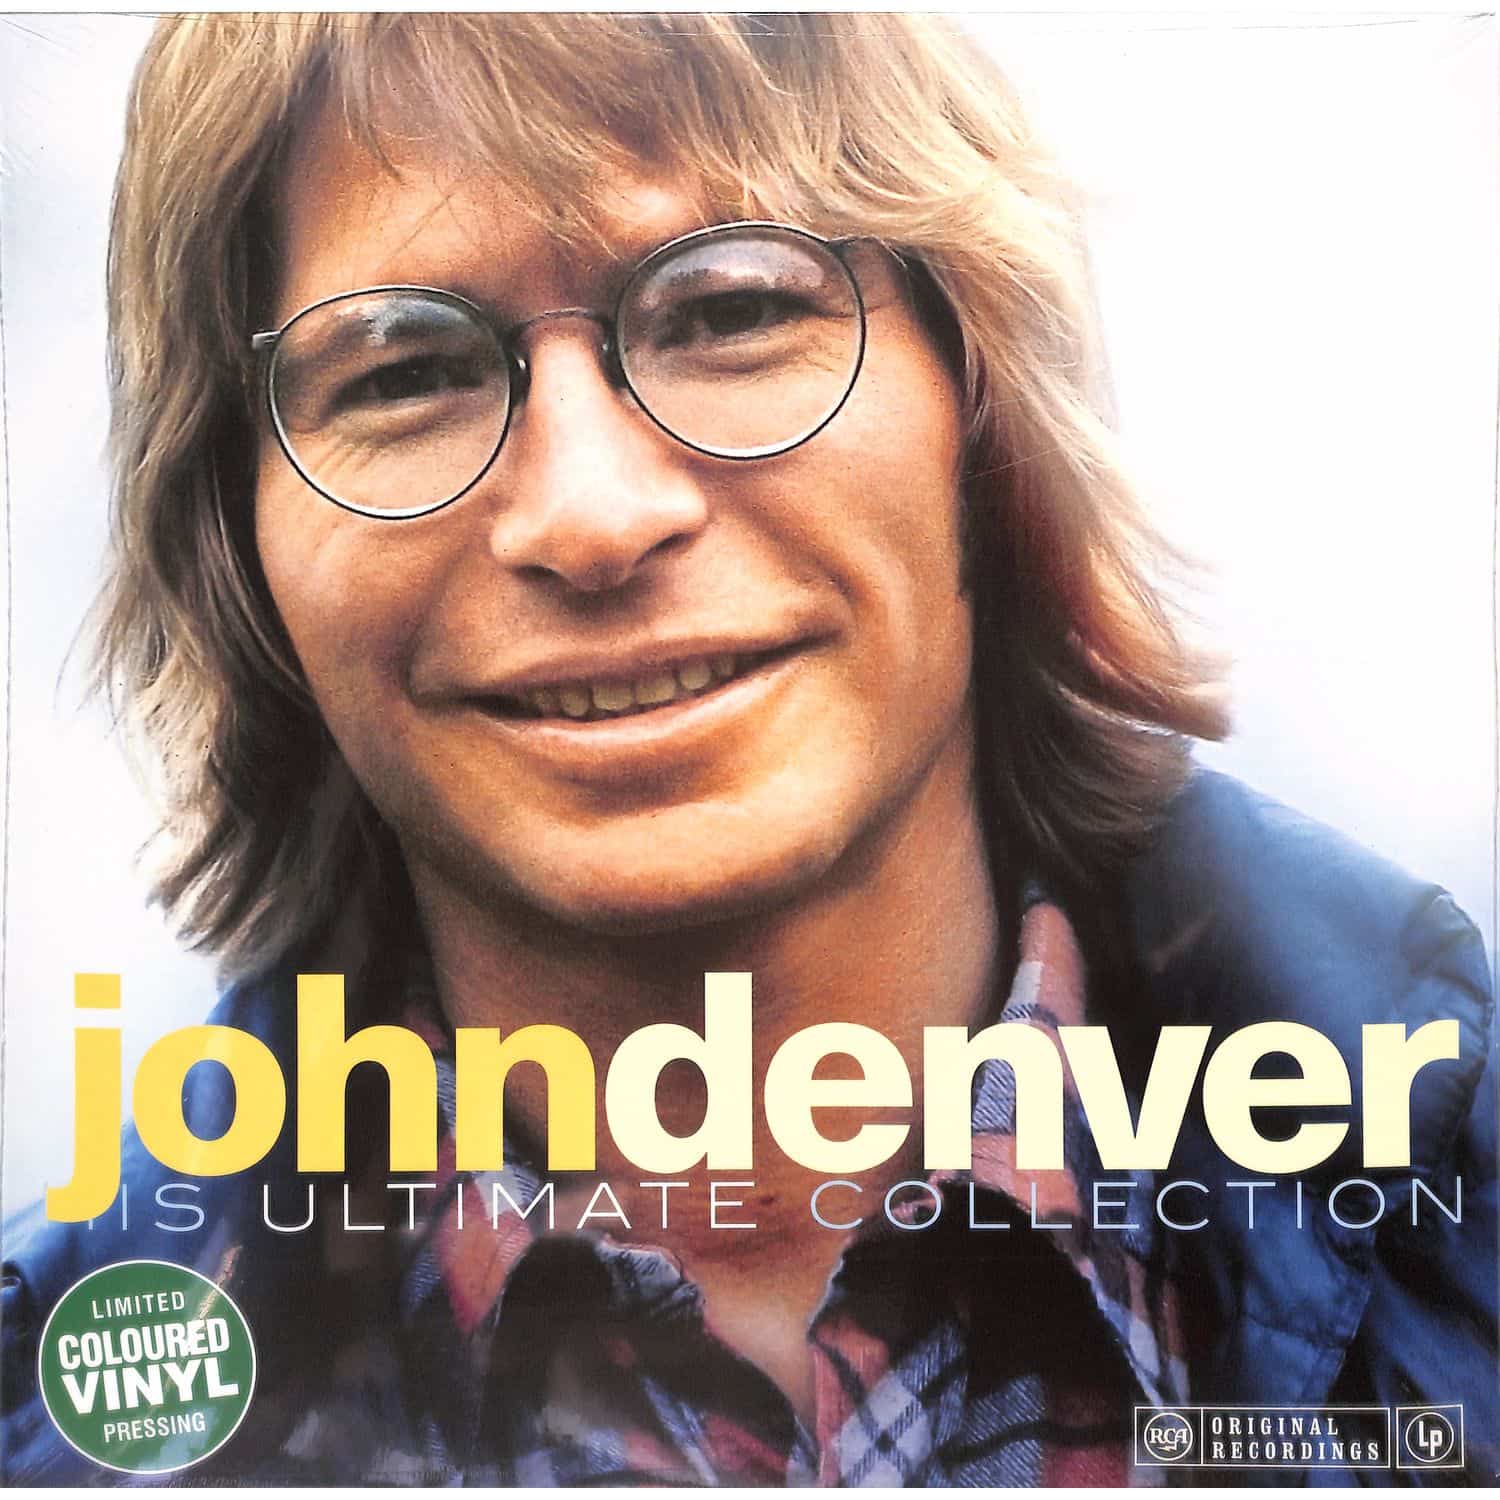 John Denver - HIS ULTIMATE COLLECTION 